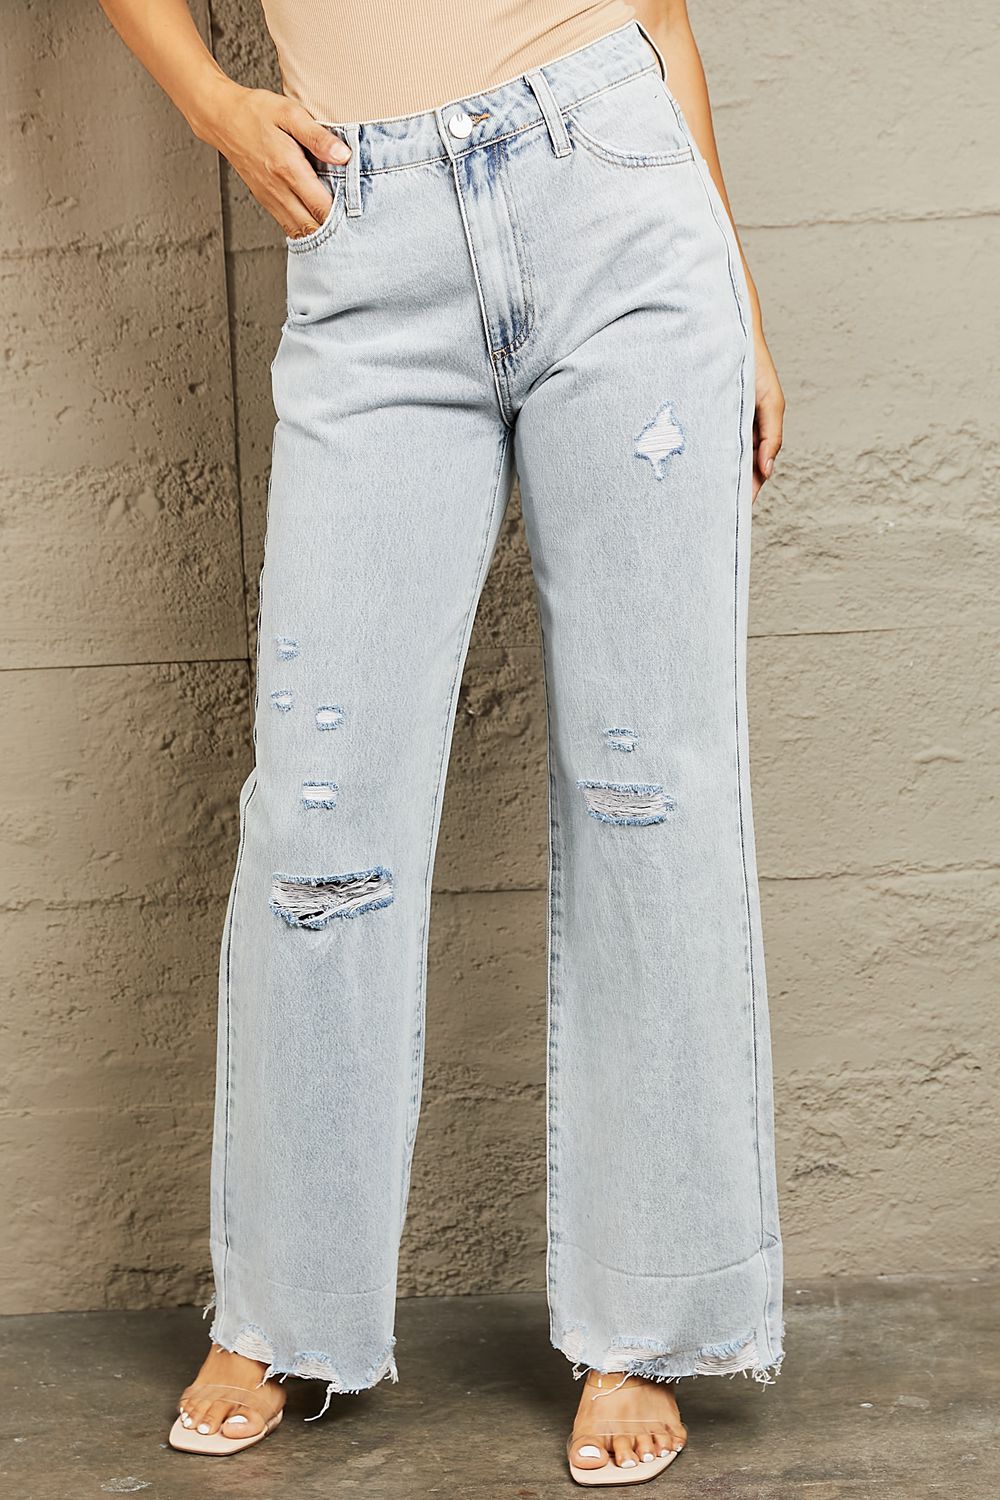 BAYEAS High Waist Flare Jeans - nailedmoms